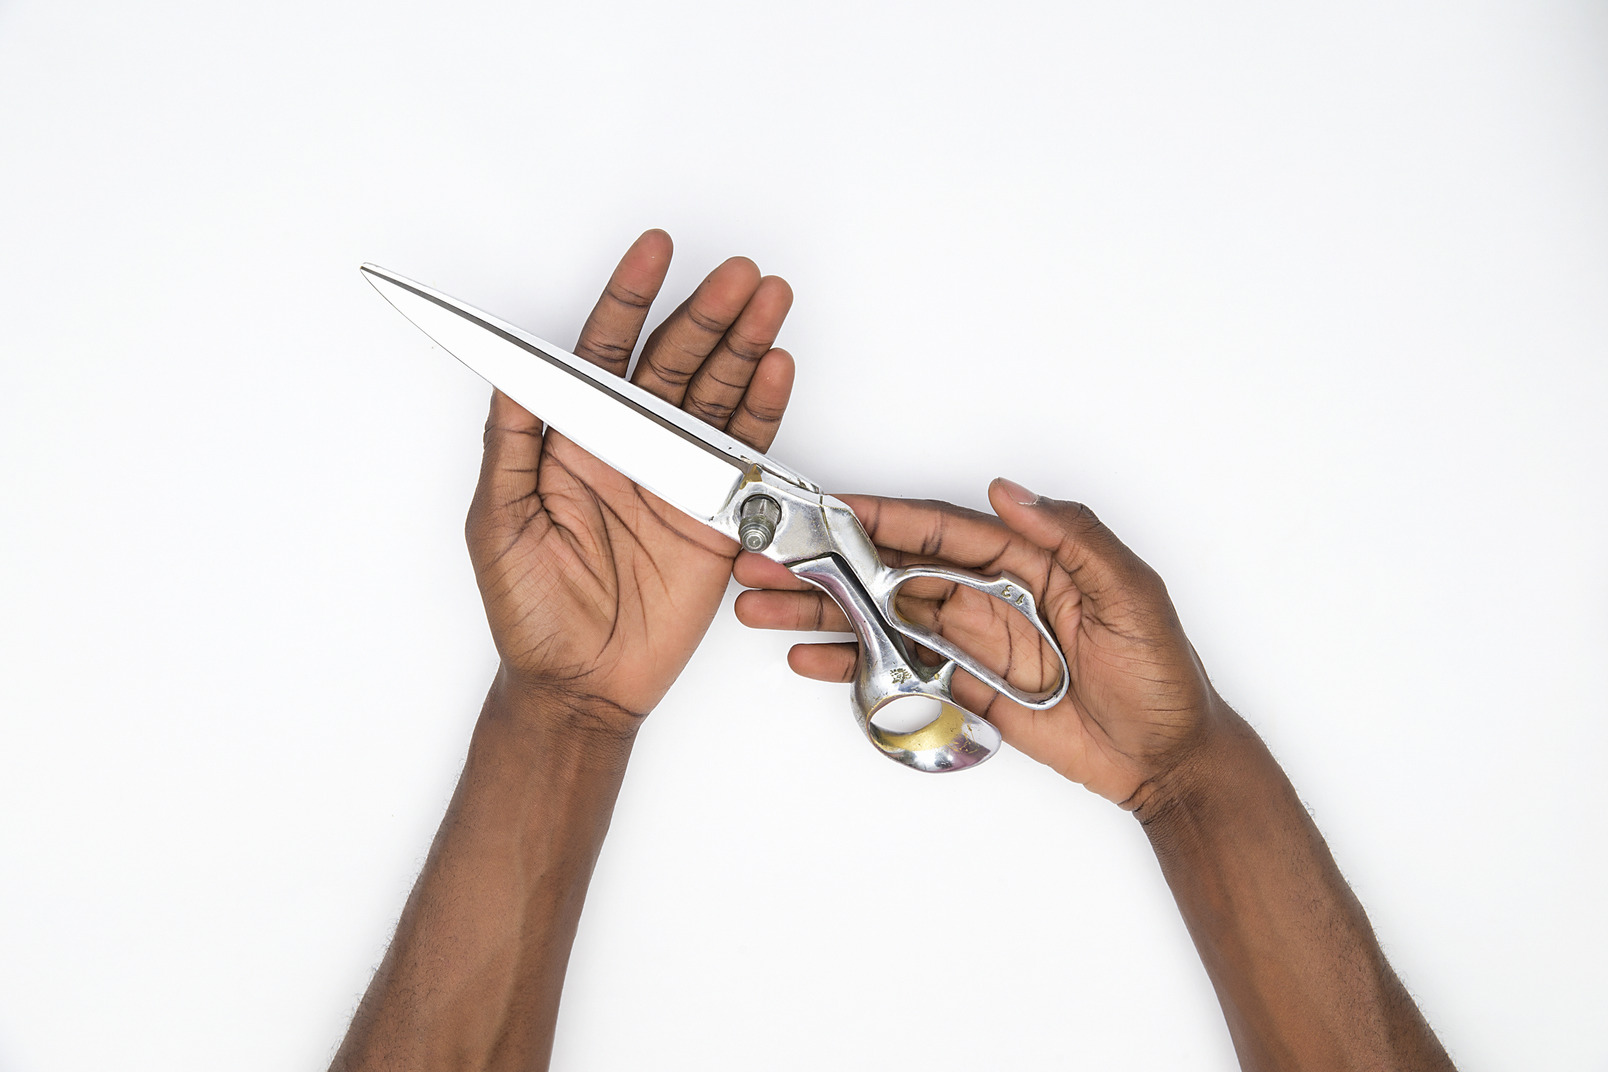 Male hands holding big scissors